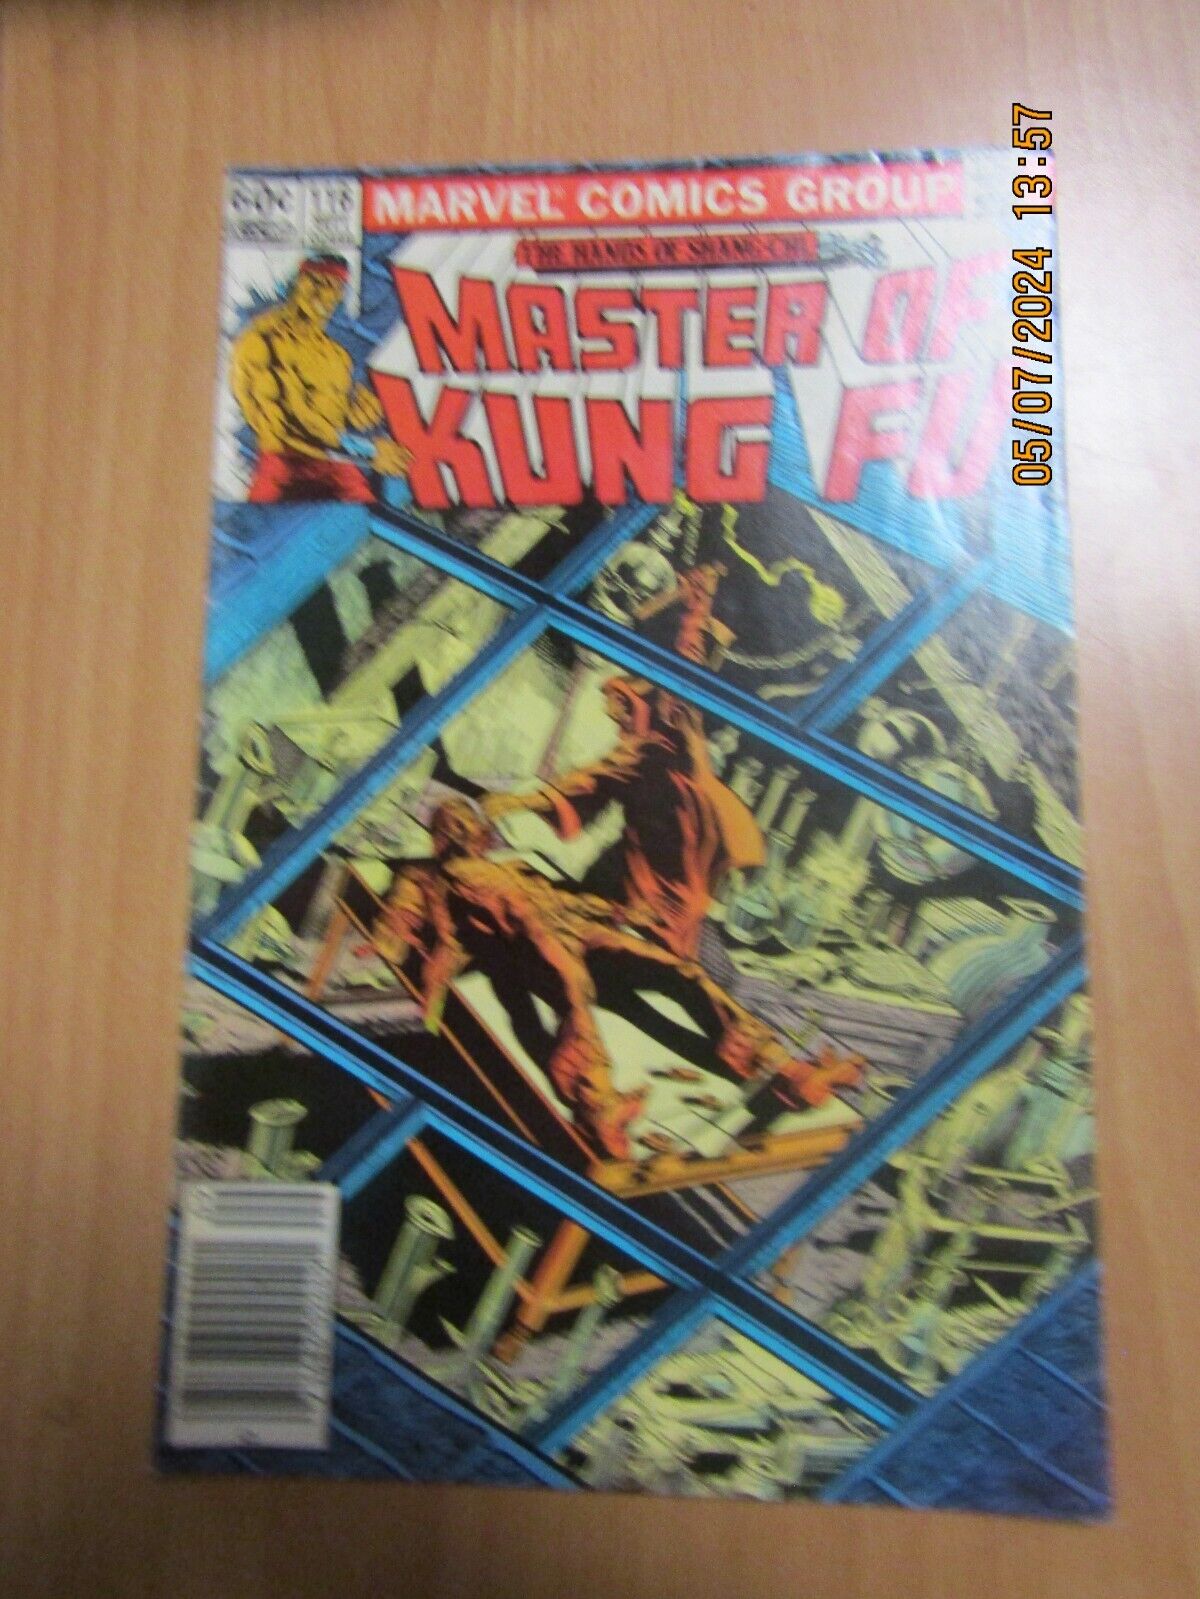 1982 Vintage Marvel Comics Group - Masters of Kung Fu Vol. 1 Sept #116